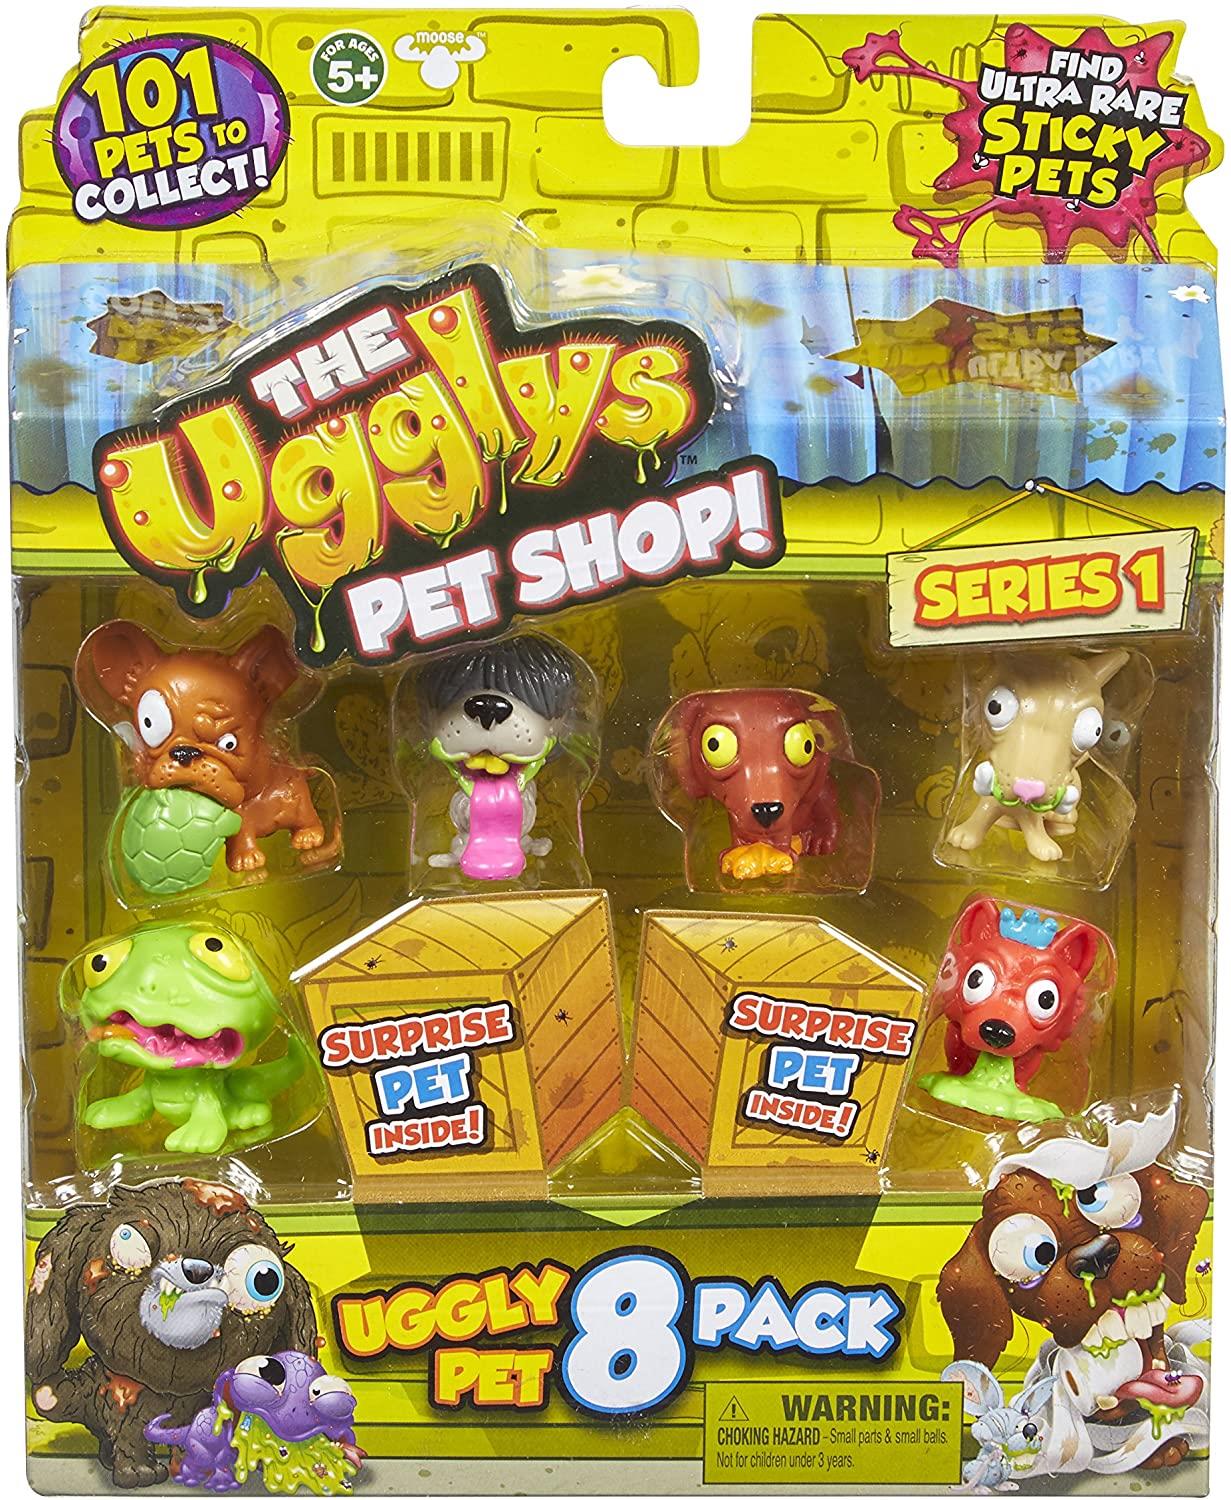 Uggly Pet 8 Toy Pack The Ugglys Pet Shop Mini Figures Les styles peuvent varier